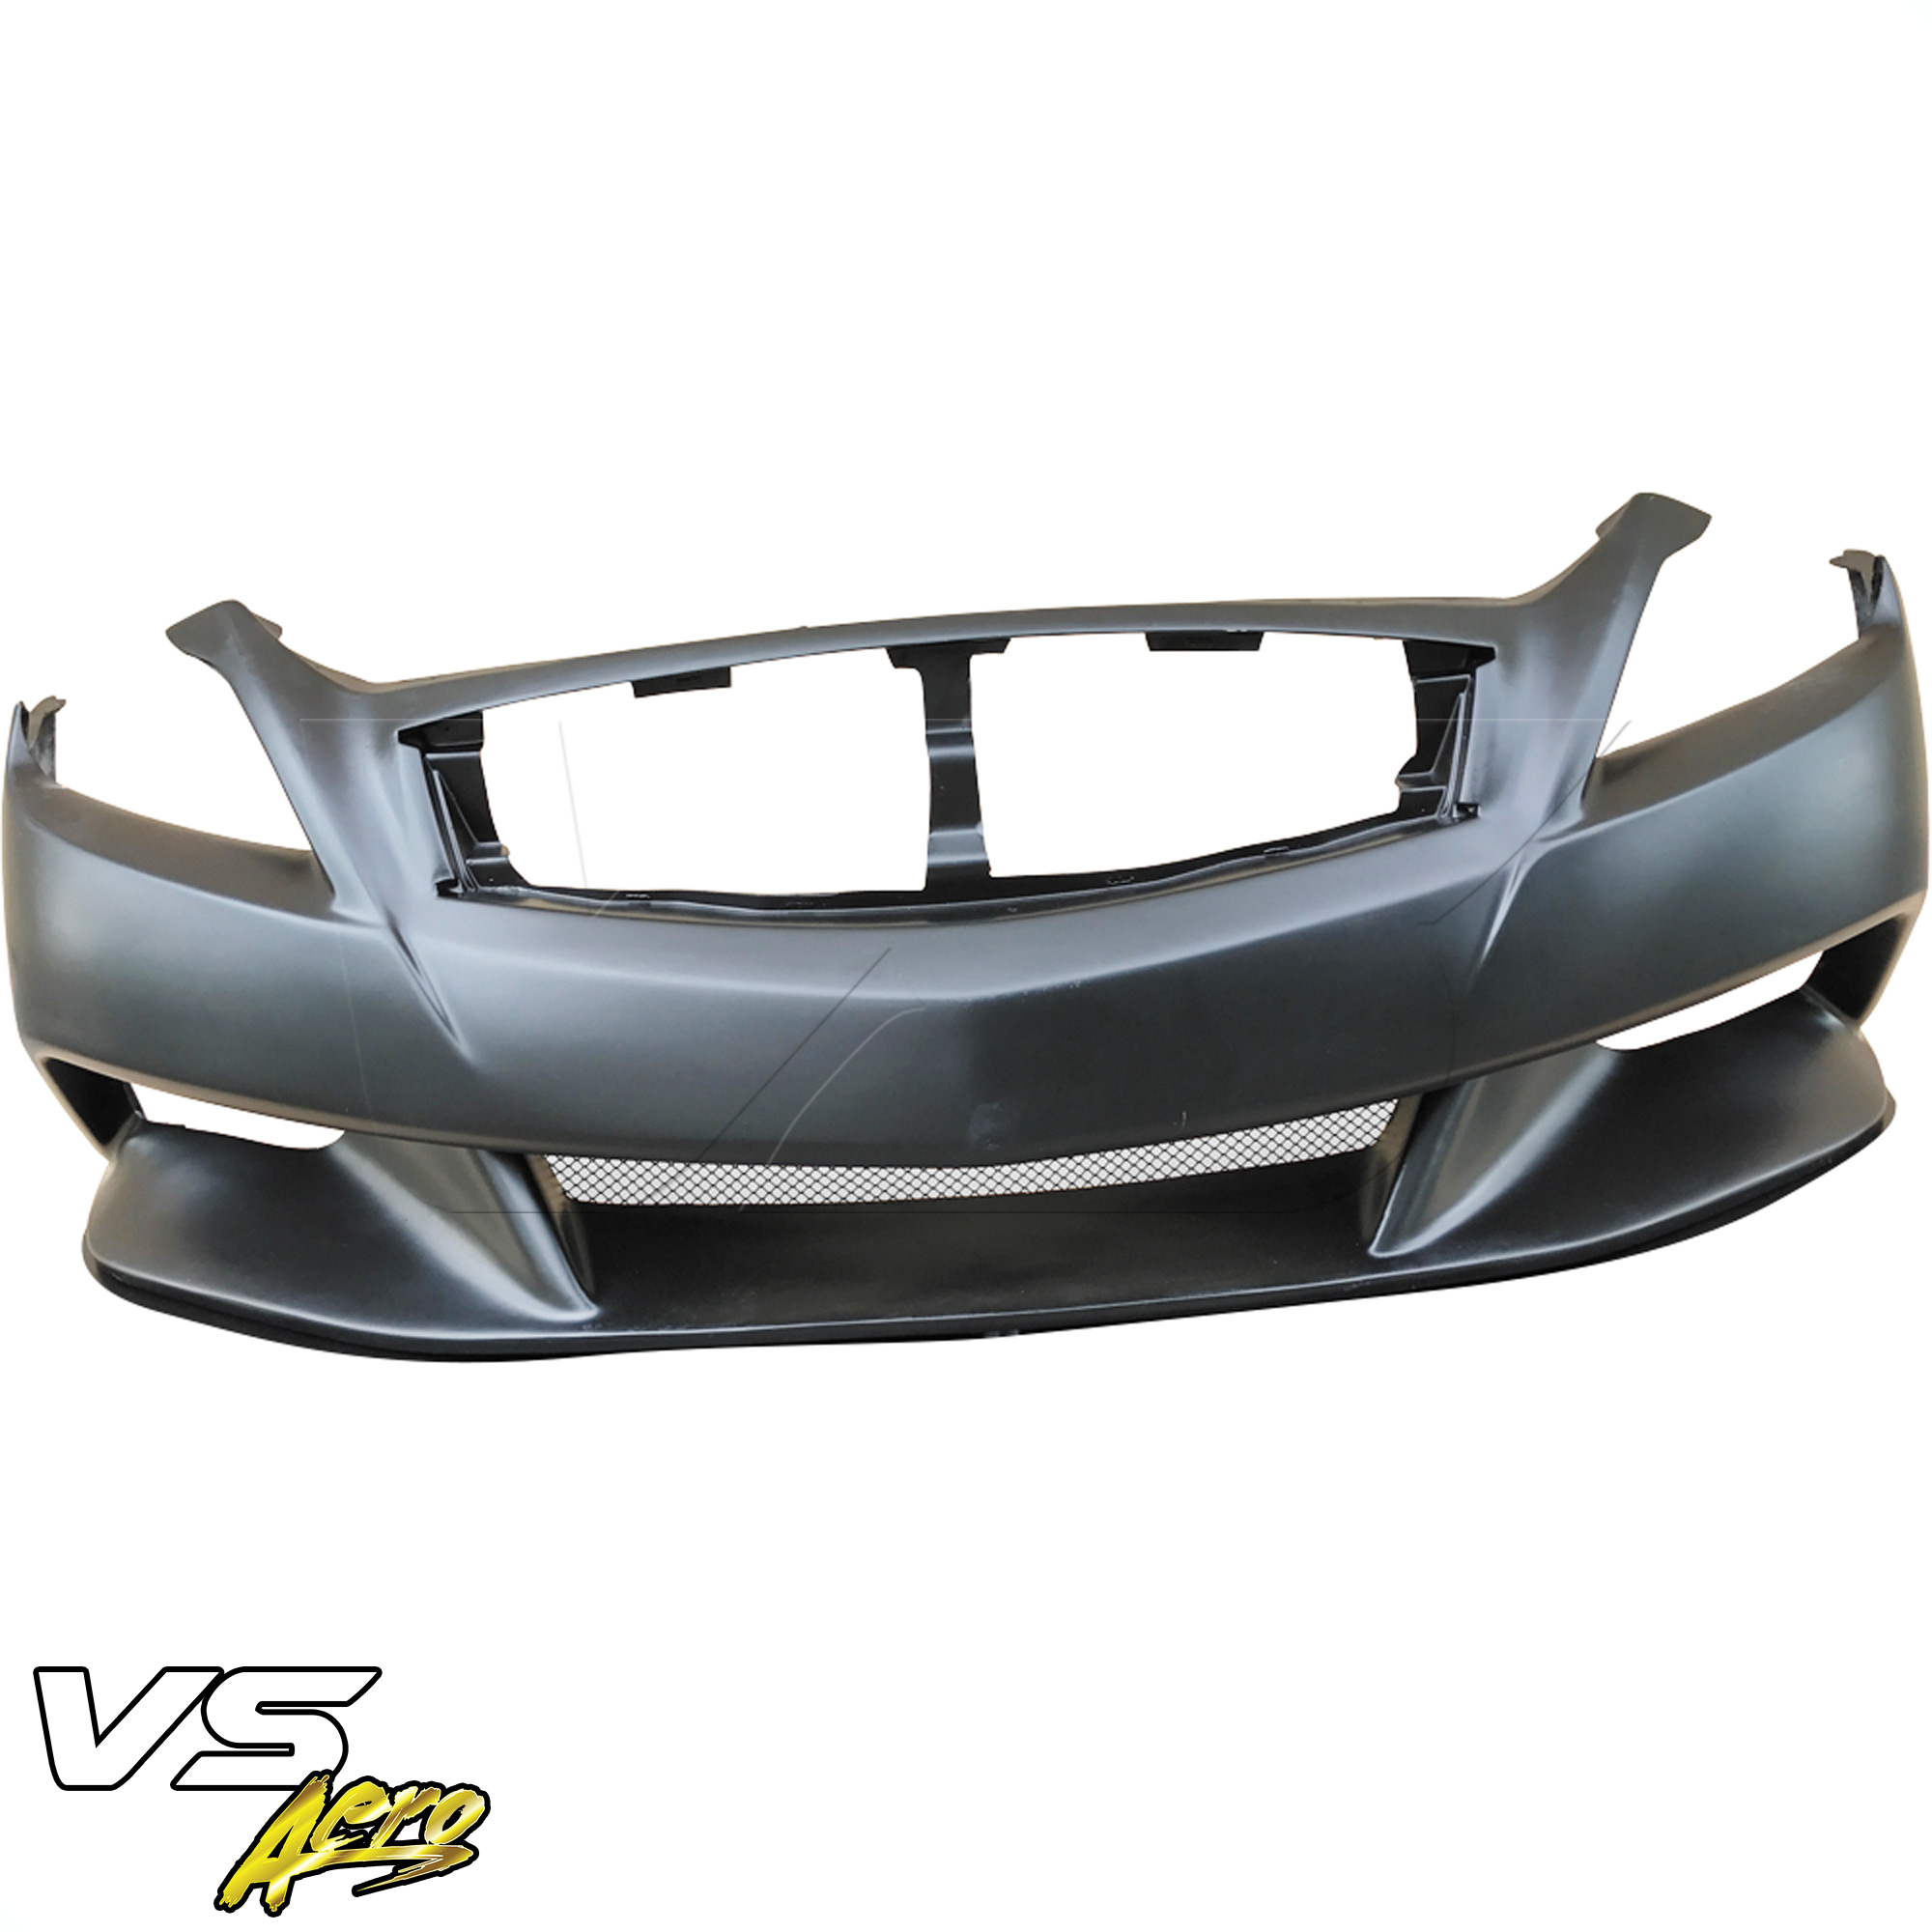 VSaero FRP LBPE Front Bumper > Infiniti G37 Coupe 2008-2015 > 2dr Coupe - Image 11